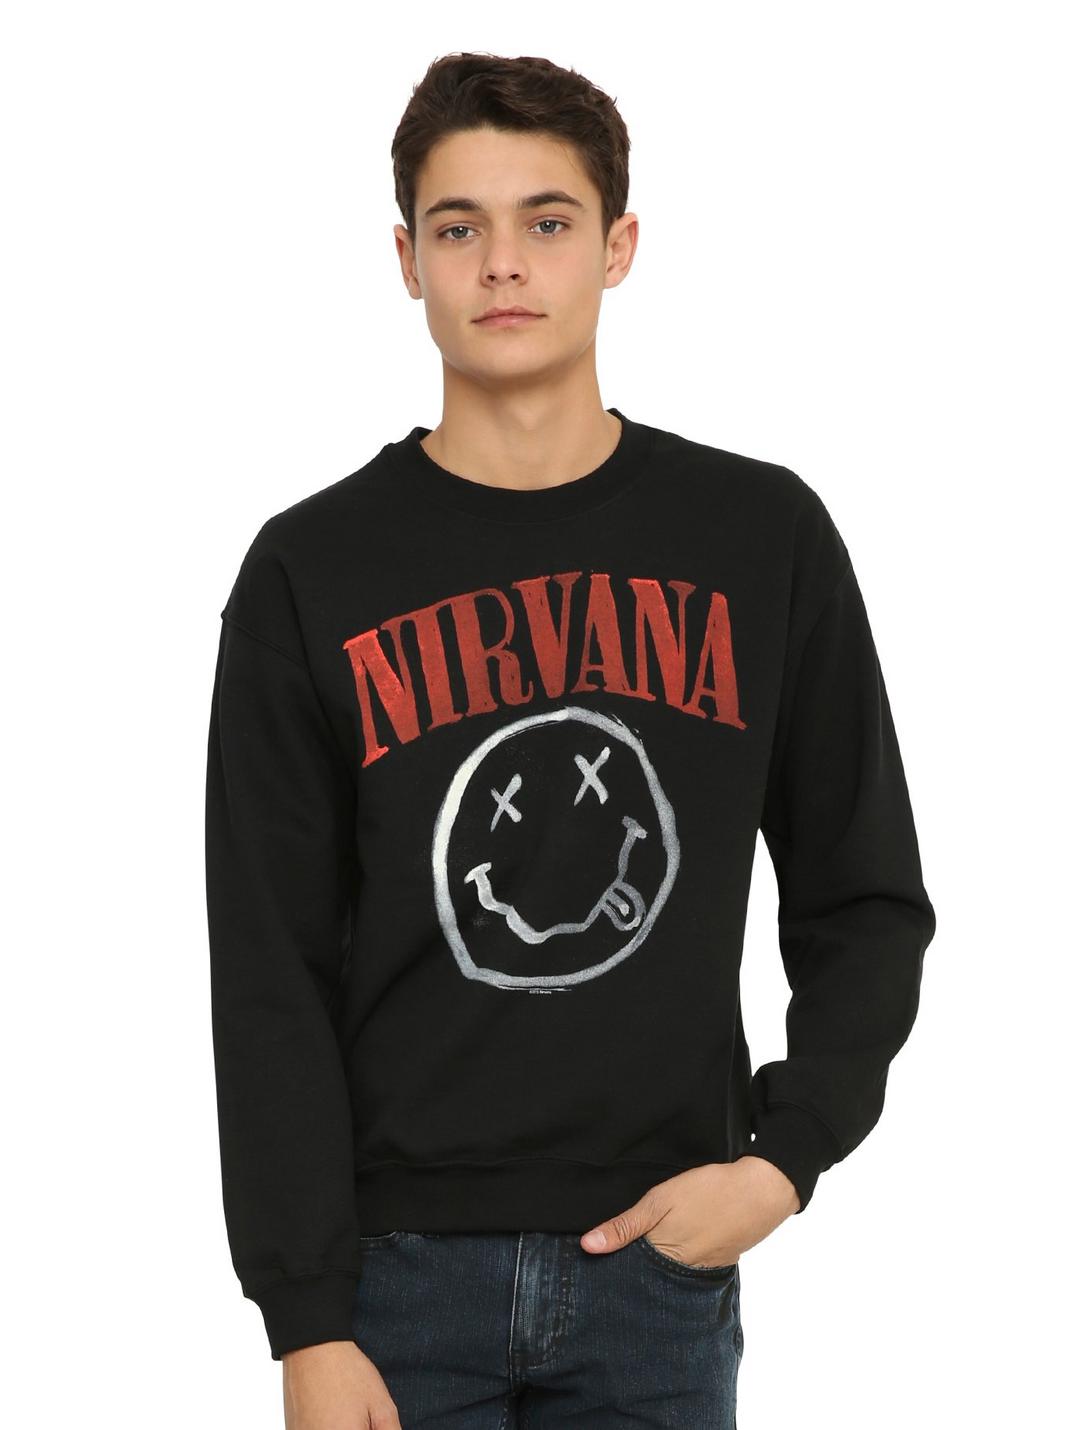 Nirvana Smiley Sweatshirt, BLACK, hi-res